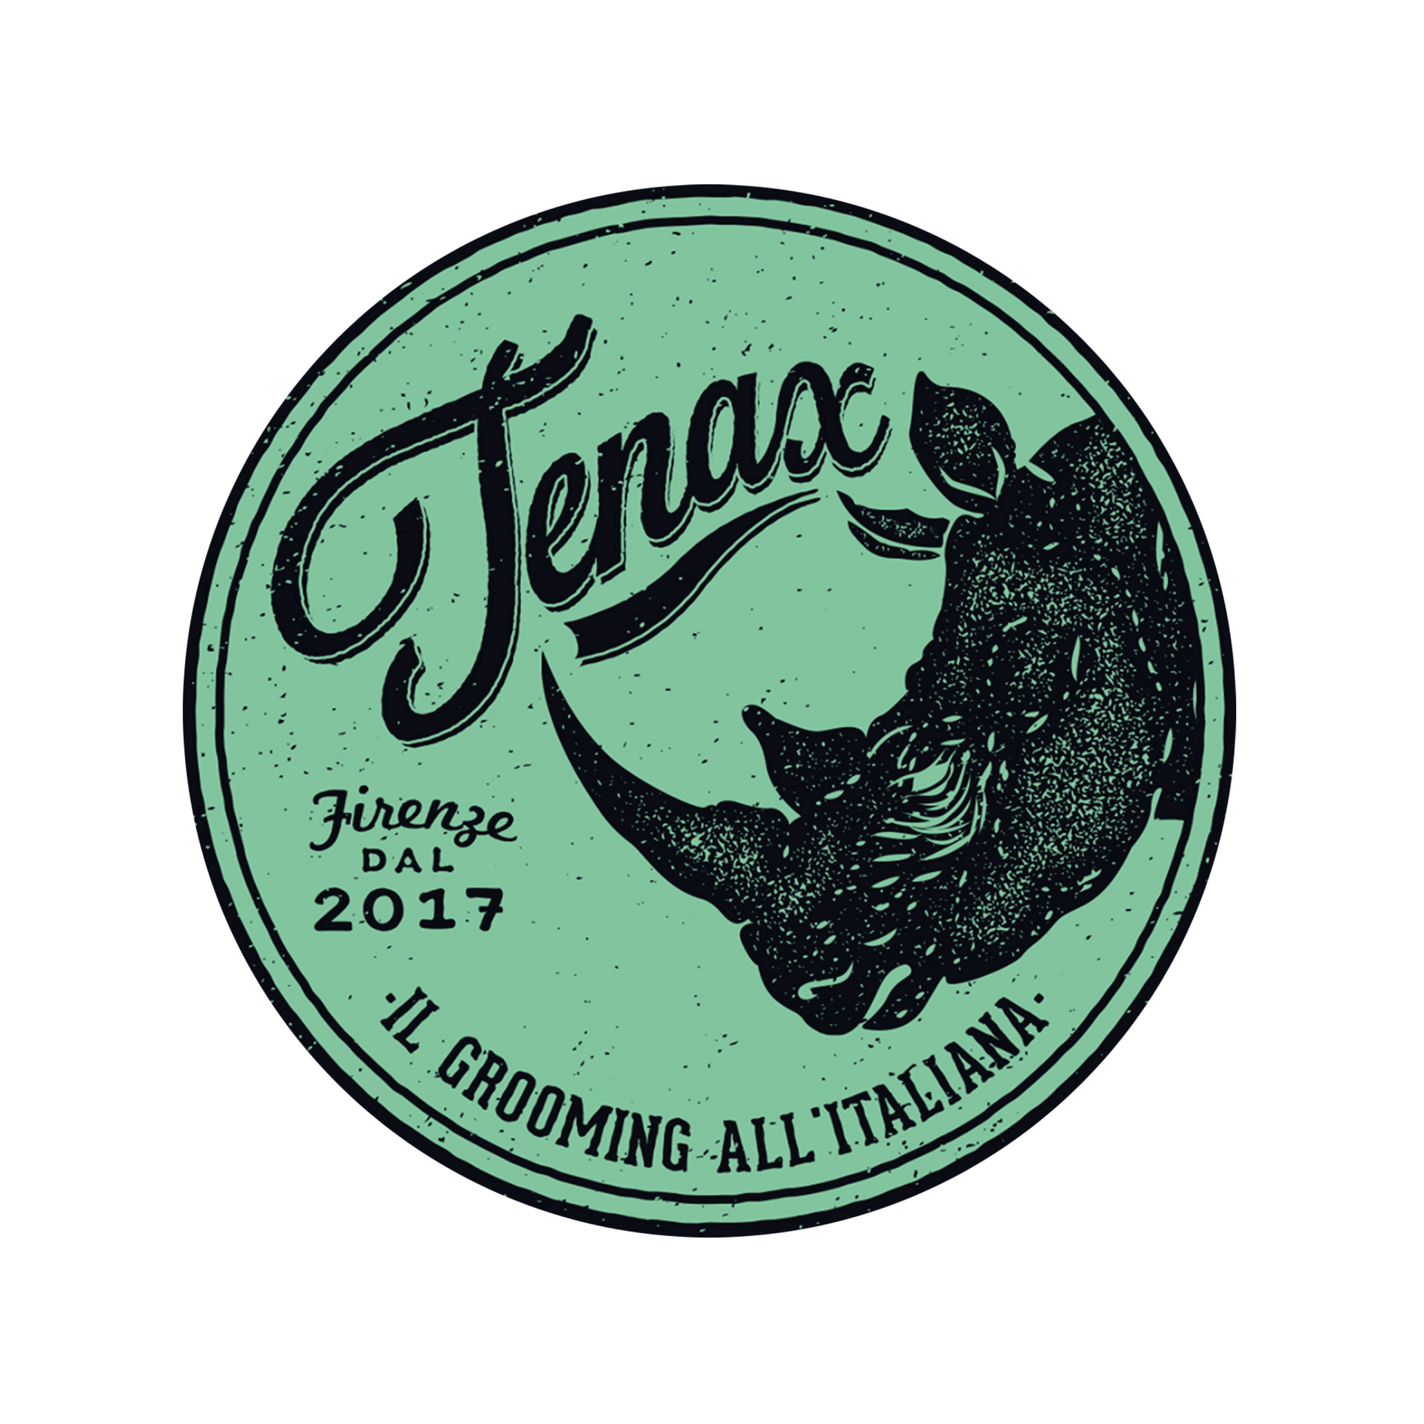 Tenax Pomade - Total Hold (Green Tin)